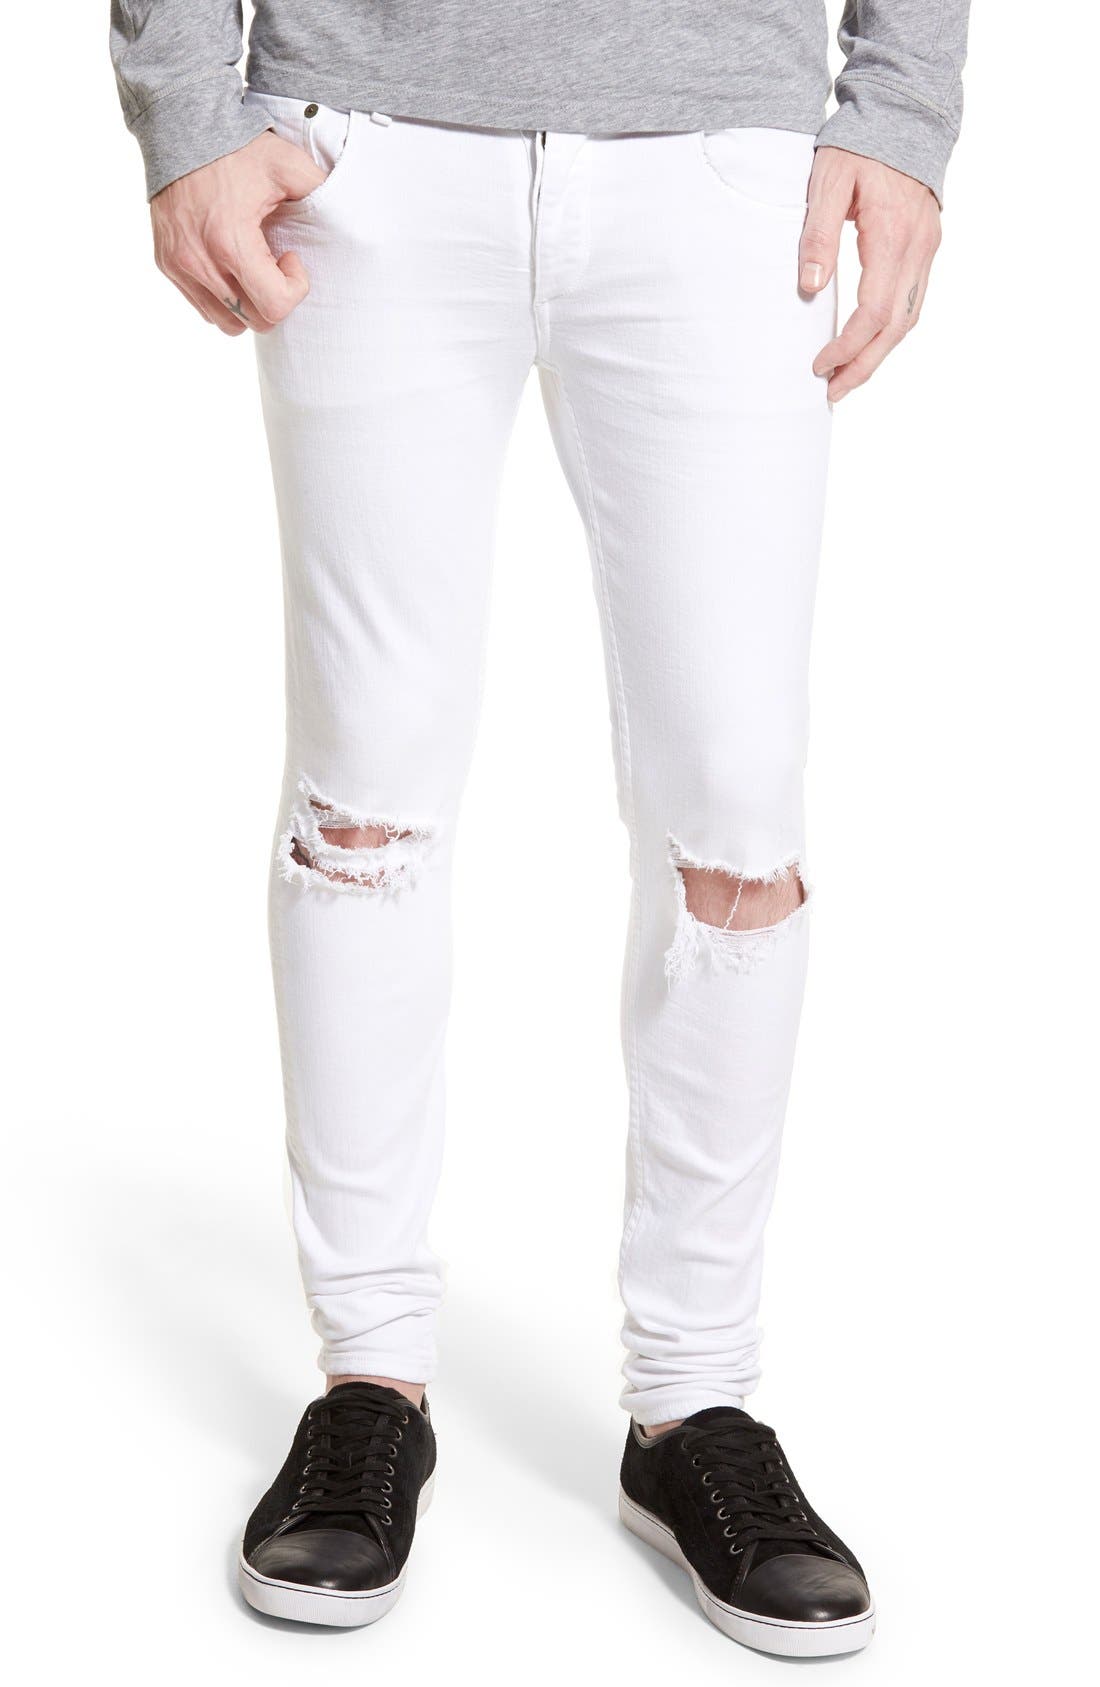 rag & bone standard issue fit 1 jeans